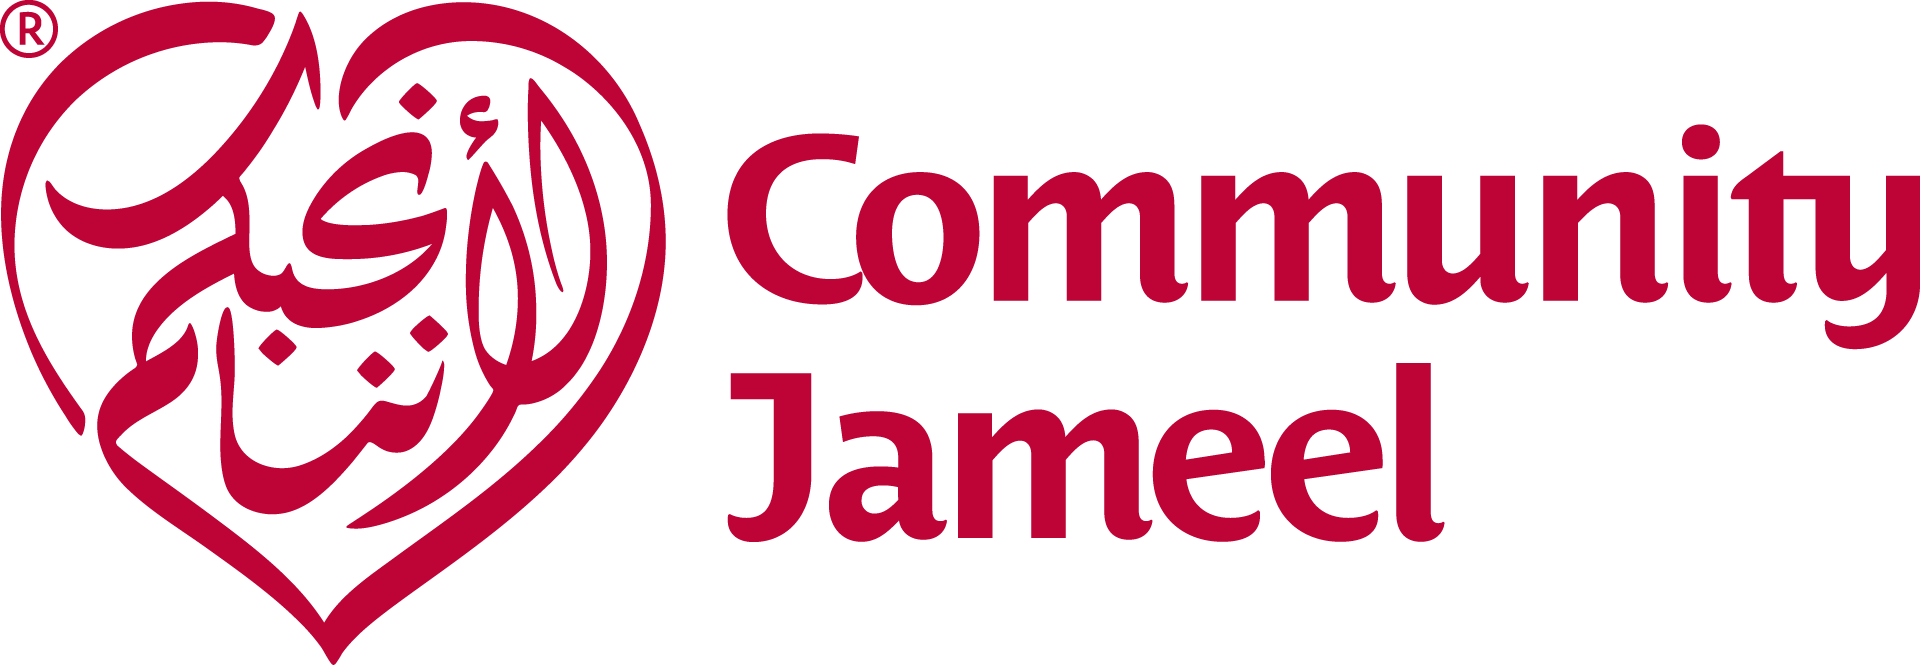 Community Jameel logo